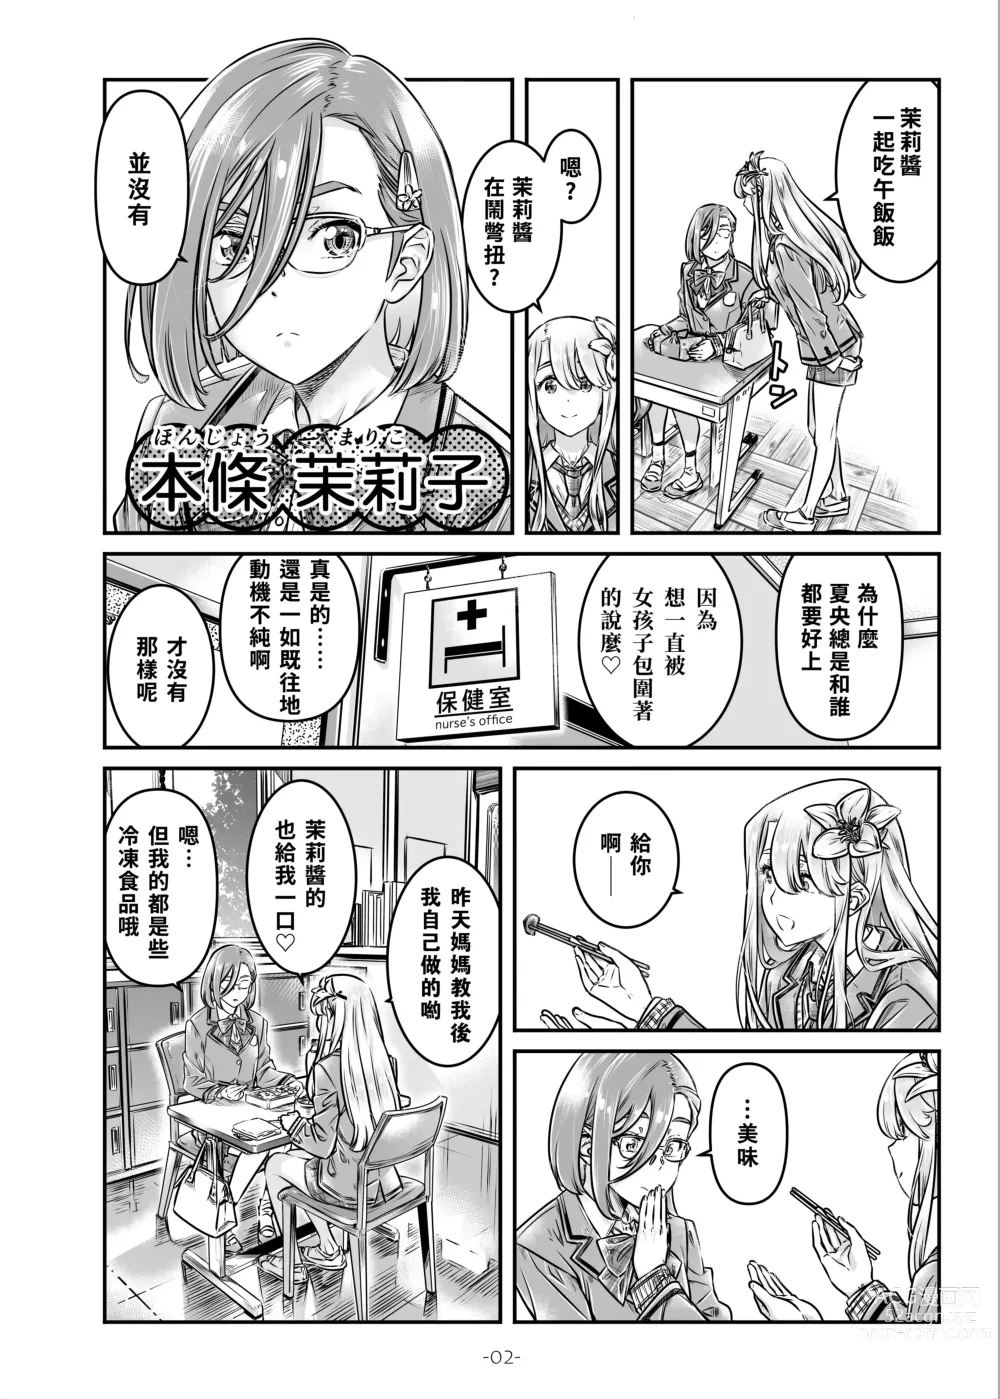 Page 3 of doujinshi Nadeshiko Hiyori 2nd season - SERIES of GIRLs LOE STORY ~episode 3~